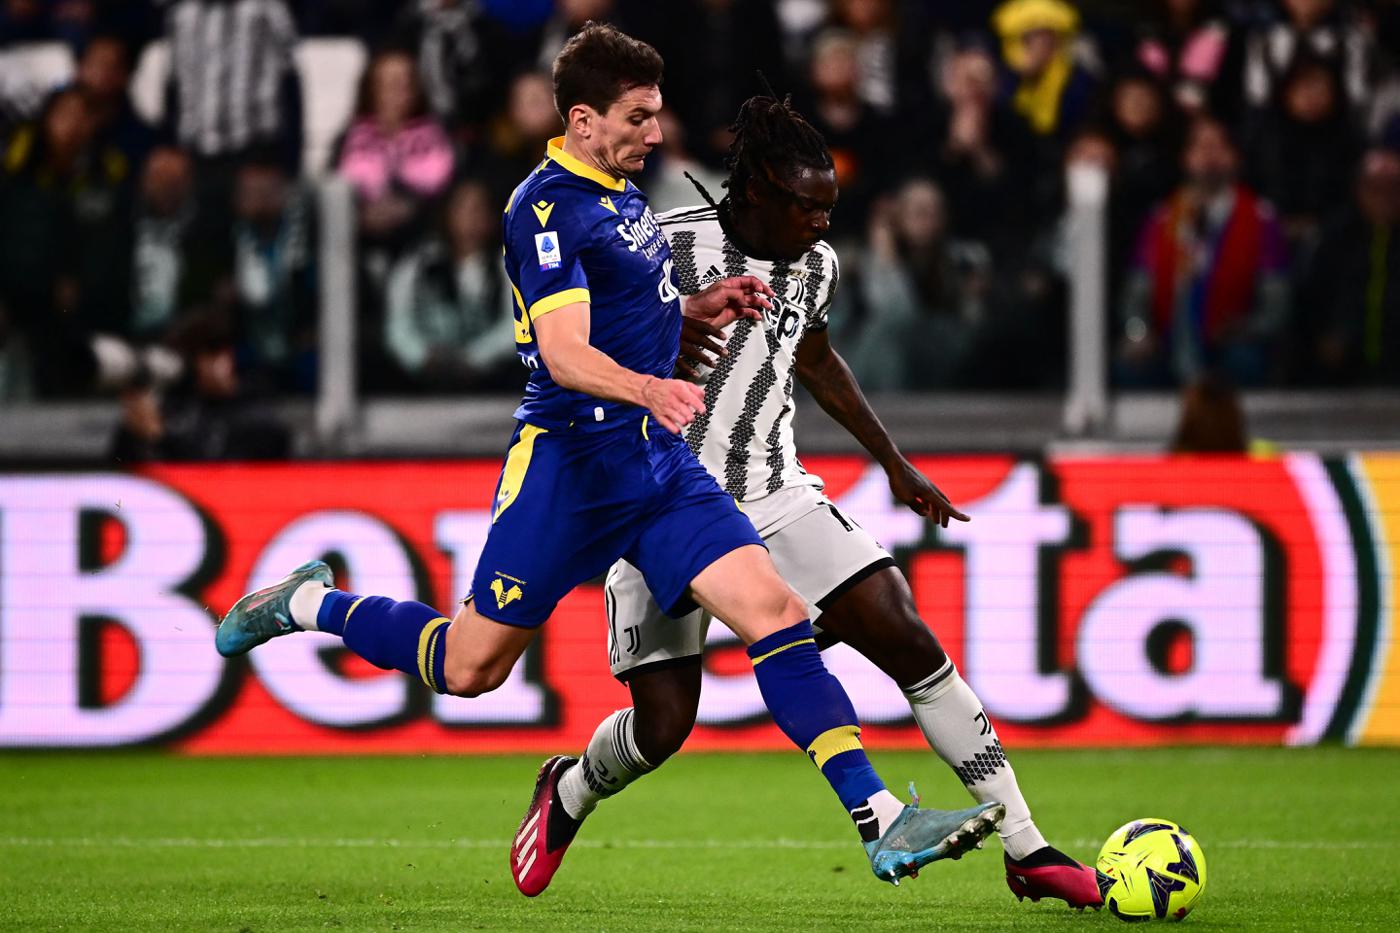 Juventus - Verona - 1:0. Italian Championship, 28th round. Match review, statistics